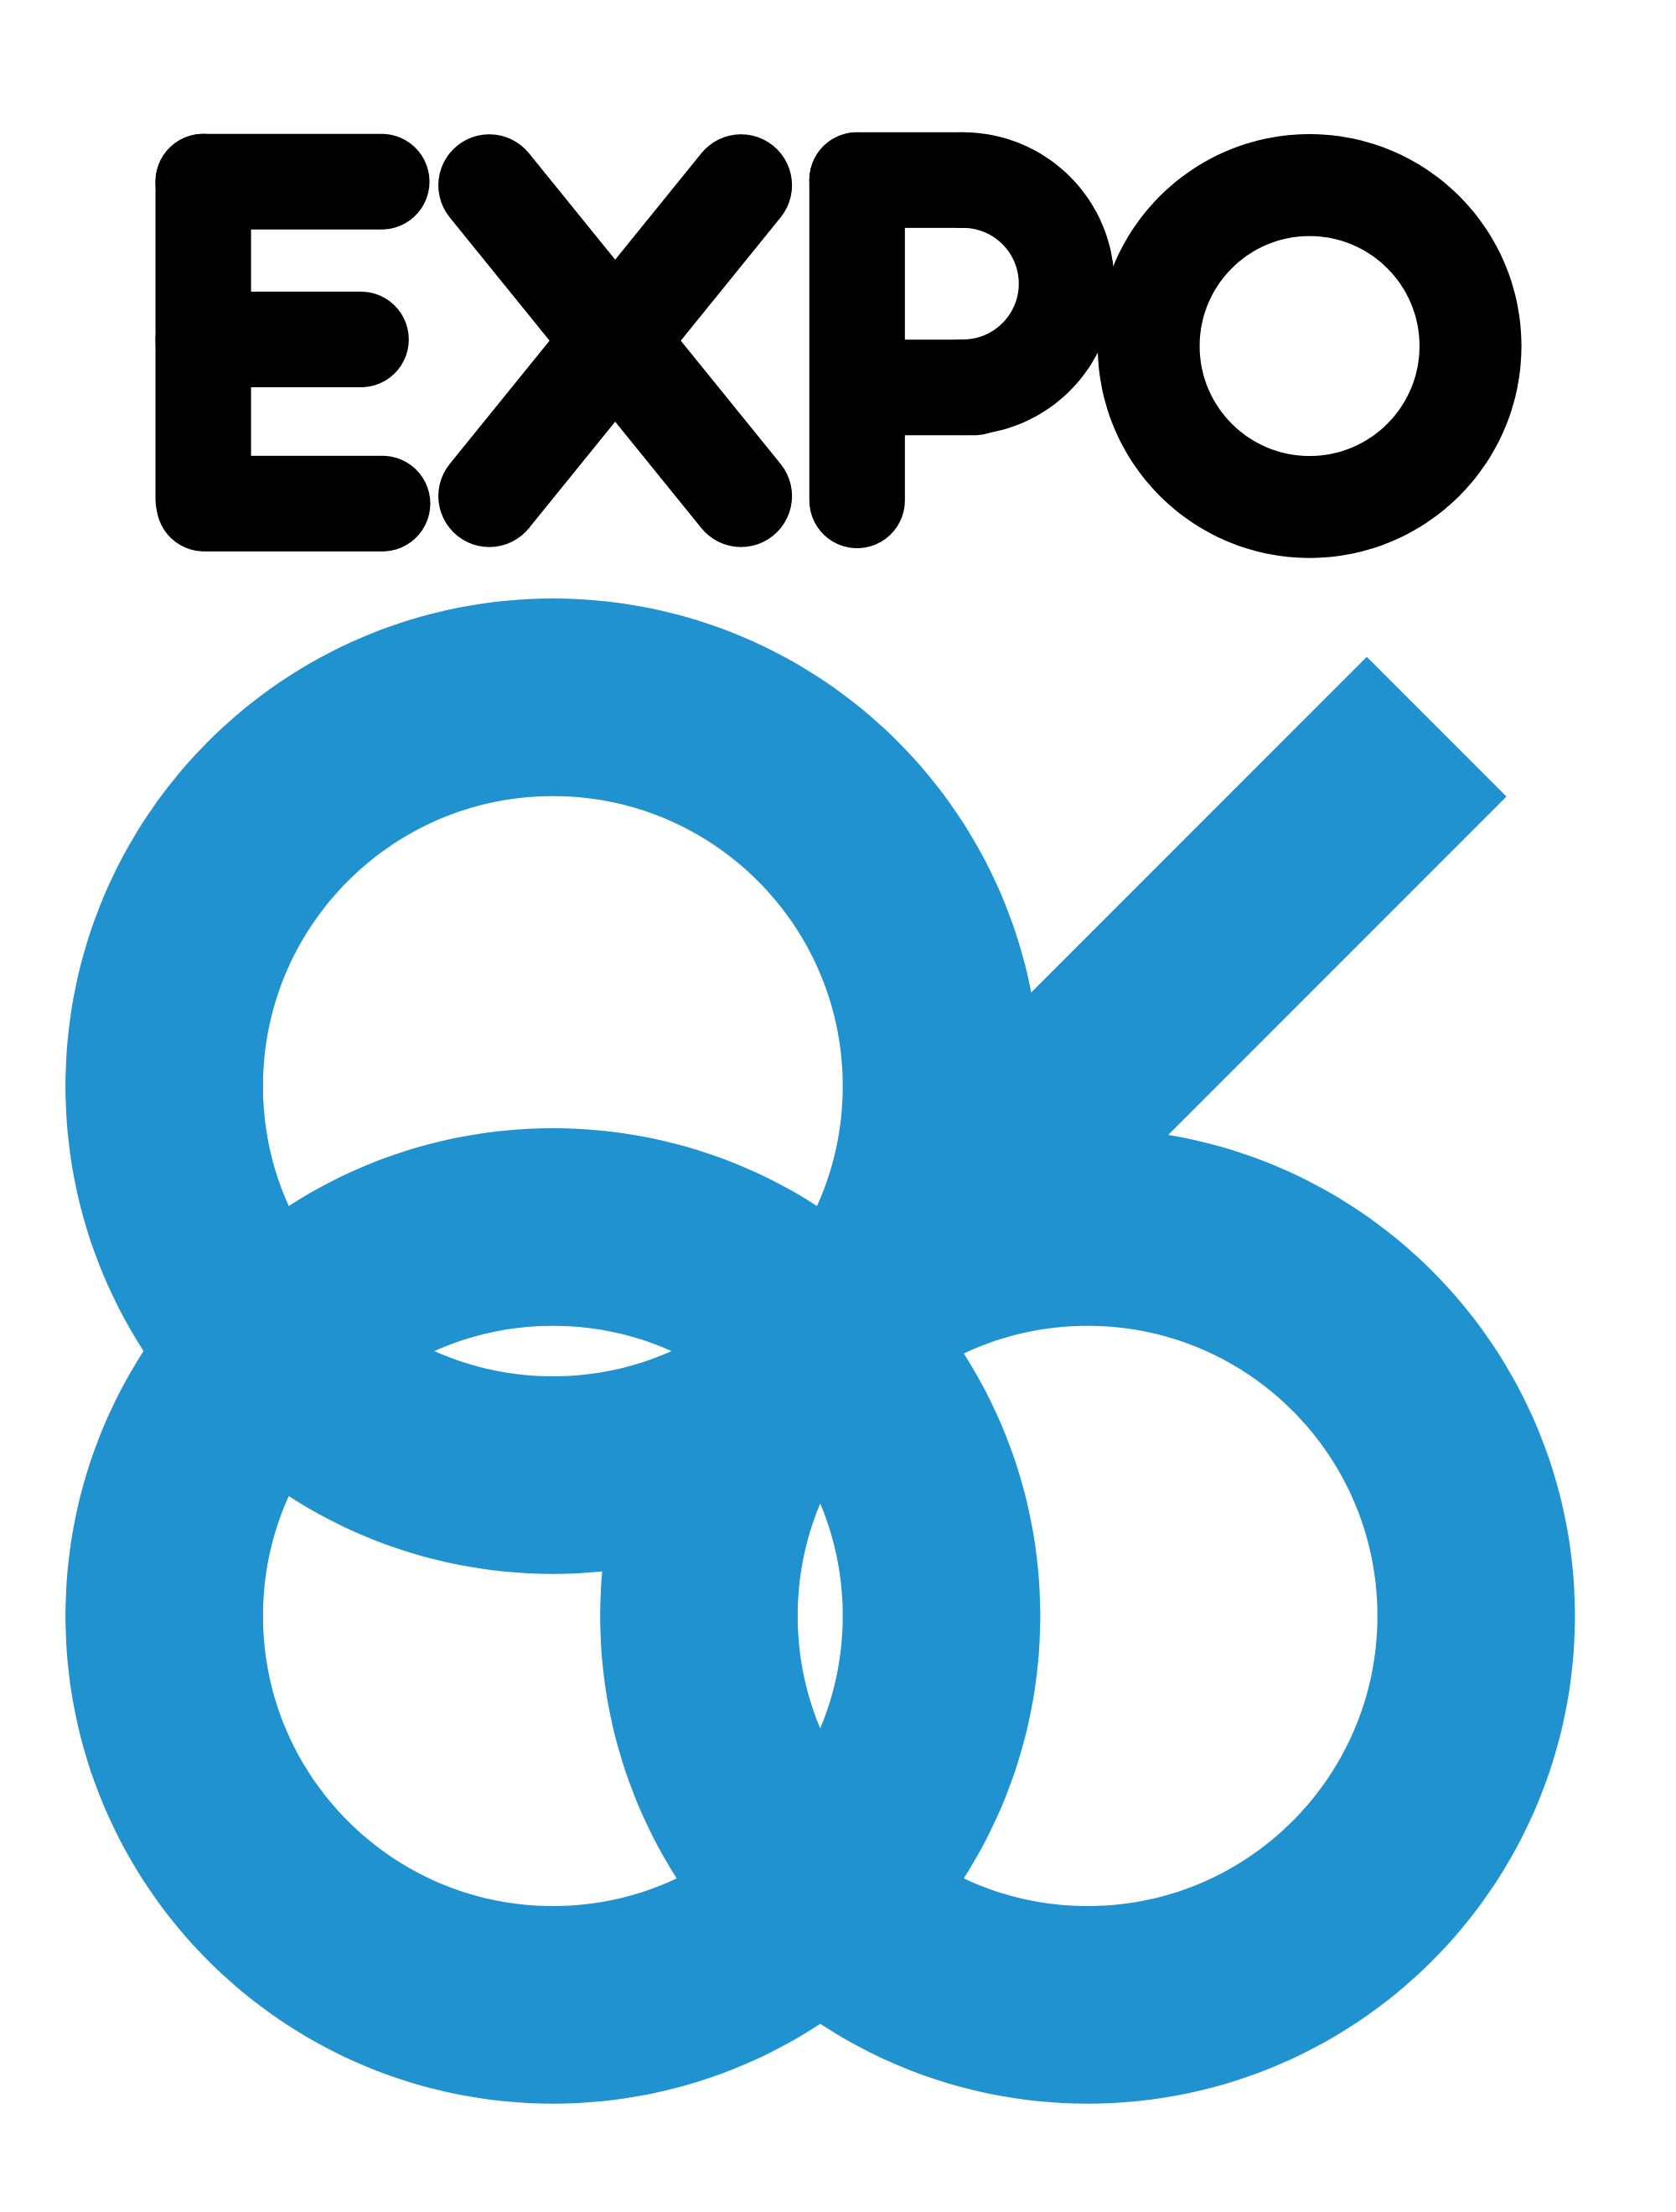 86 Logo - File:Expo86logo.svg - Wikimedia Commons